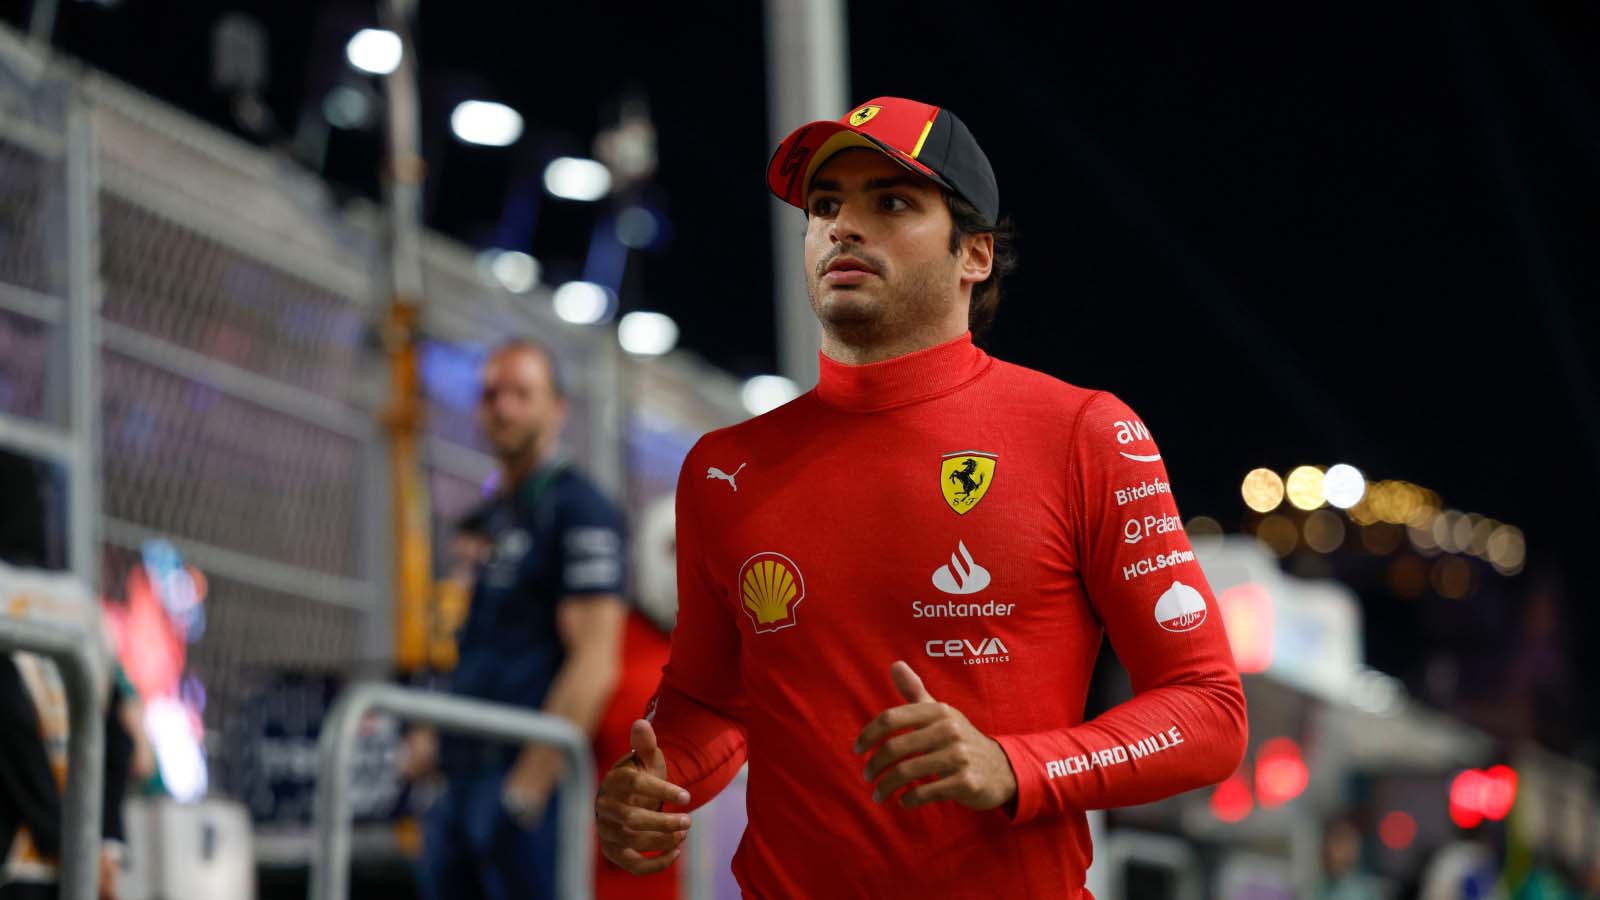 Ferrari driver Carlos Sainz in the pit lane. Jeddah March 2023.